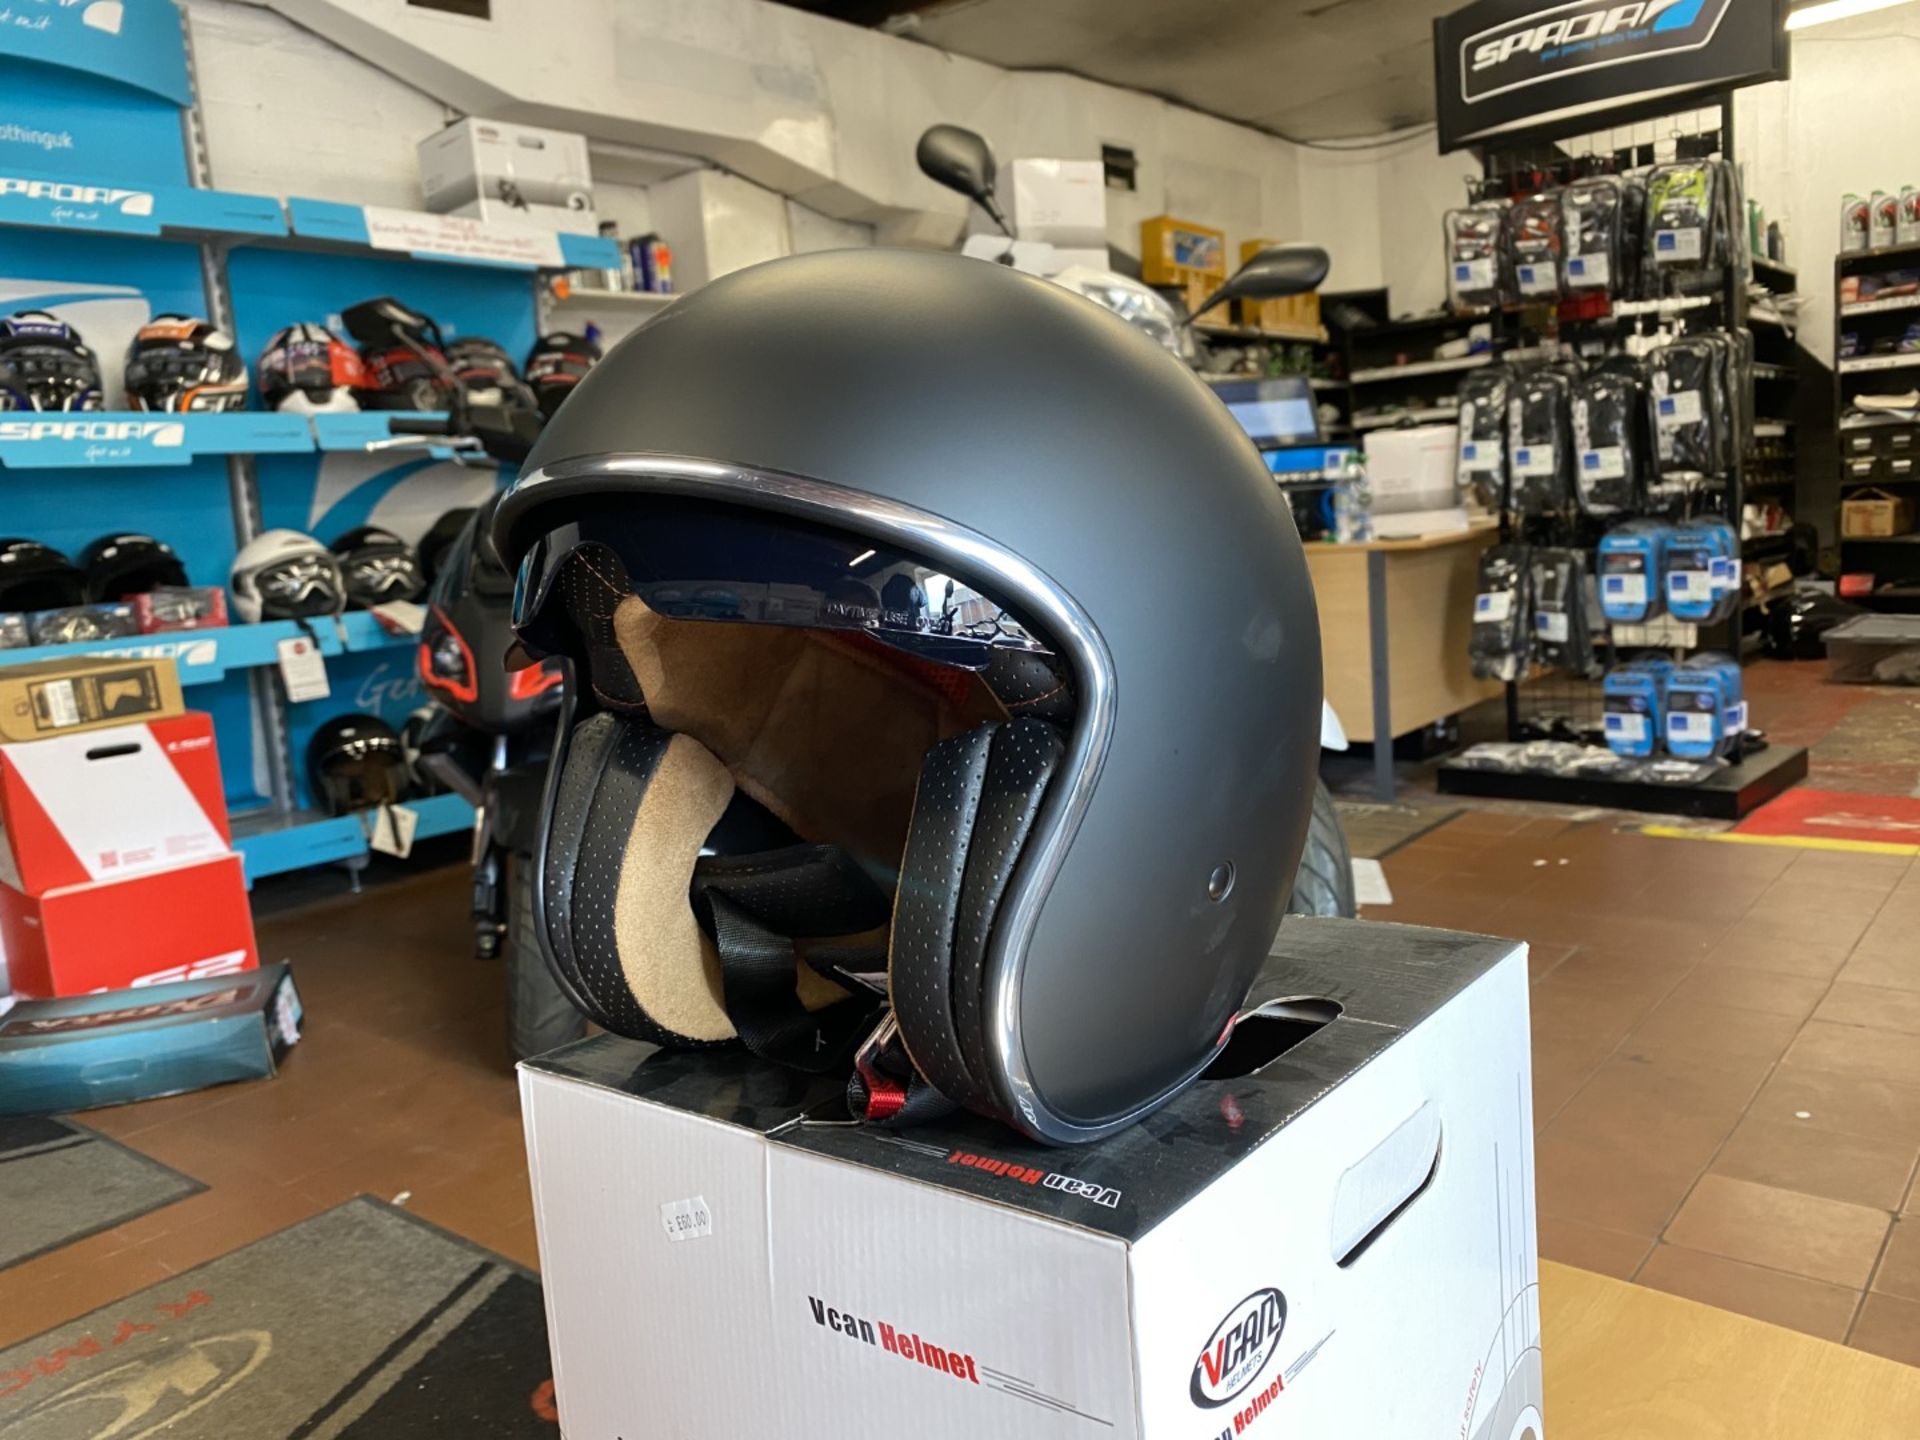 Vcan Helmet V537 Classic Matt Black Medium - Vcan Helmets - Motorcycle / Motorbike Helmet - RRP £60. - Image 2 of 5